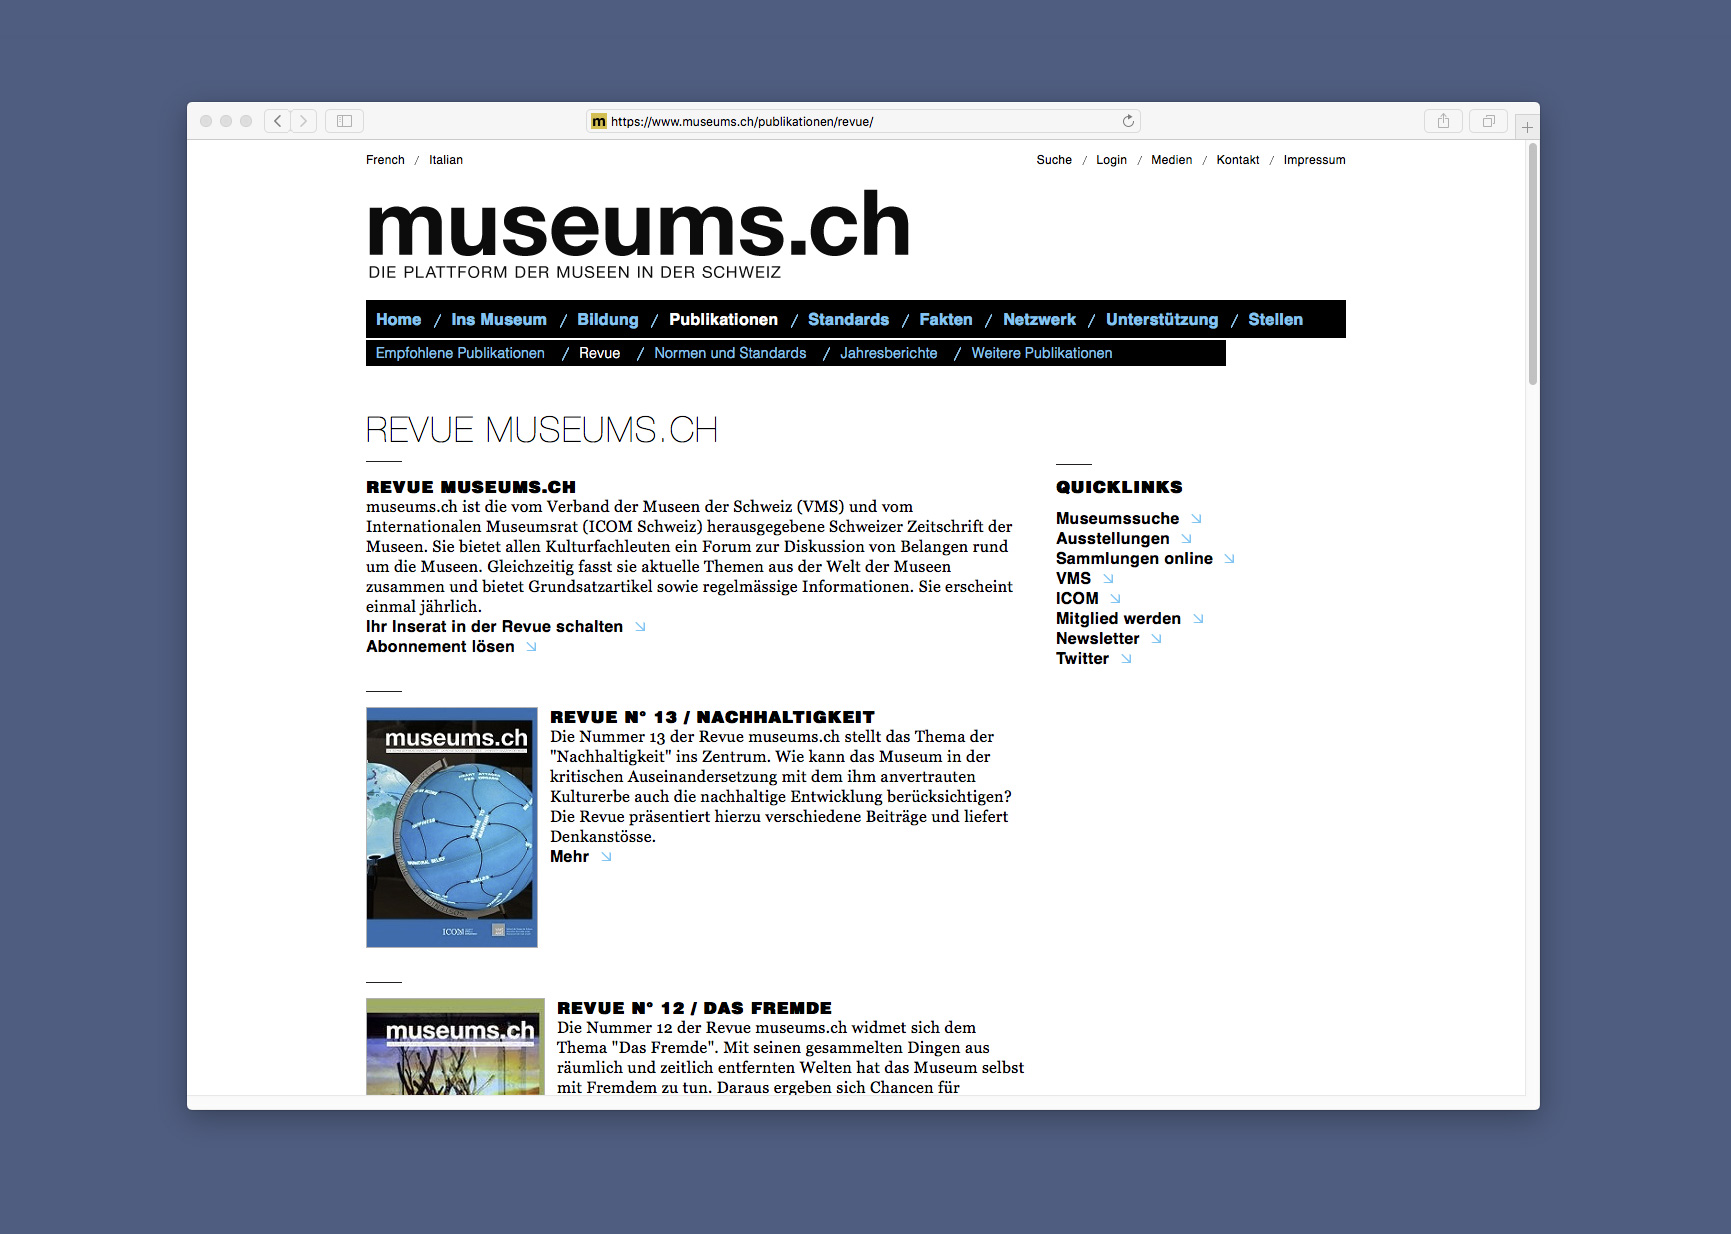 Bossard Wettstein Project - museums.ch - Website